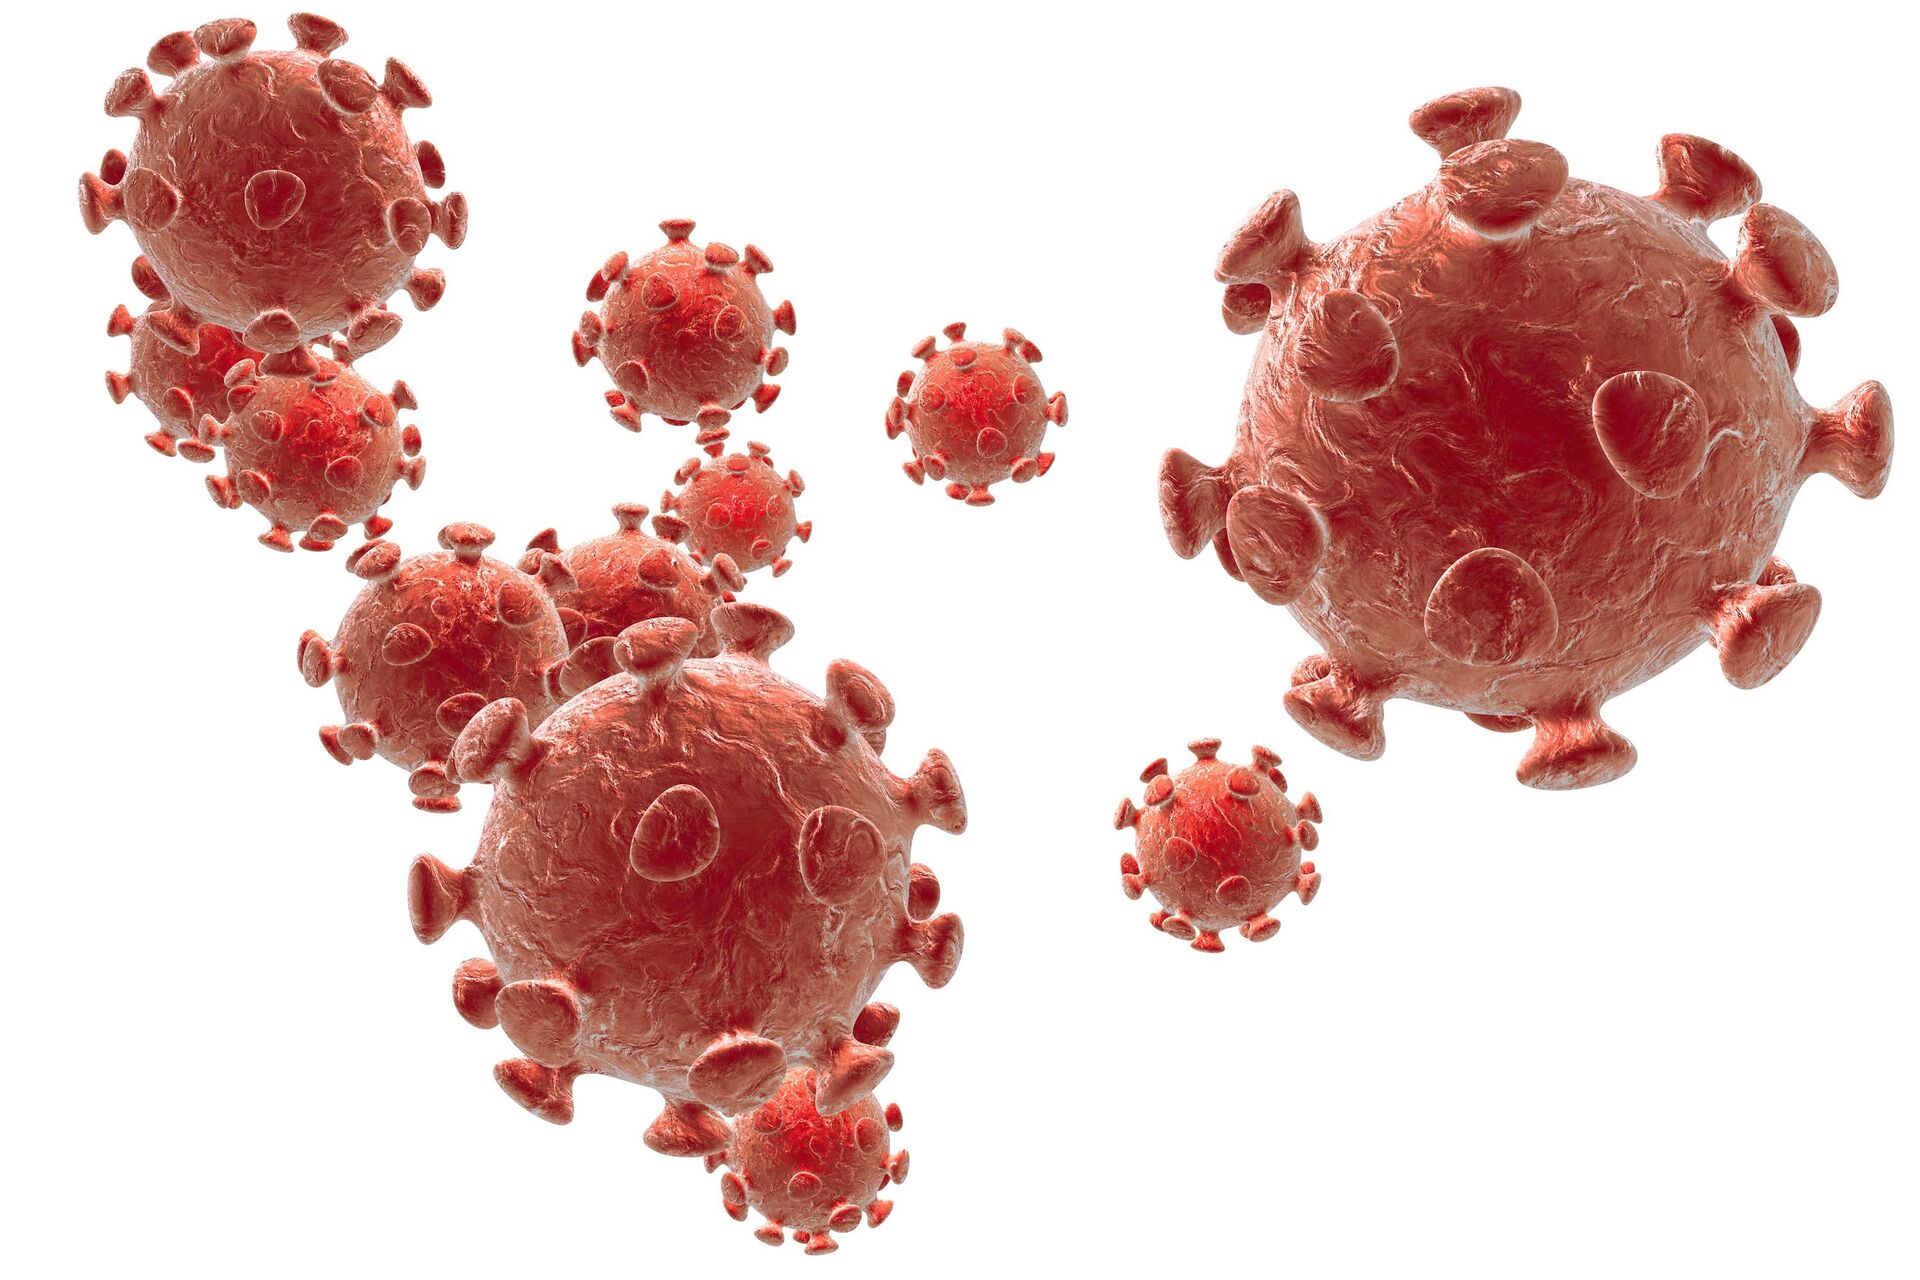 Human immunodeficiency virus. Штаммы ВИЧ. Вирус на белом фоне.